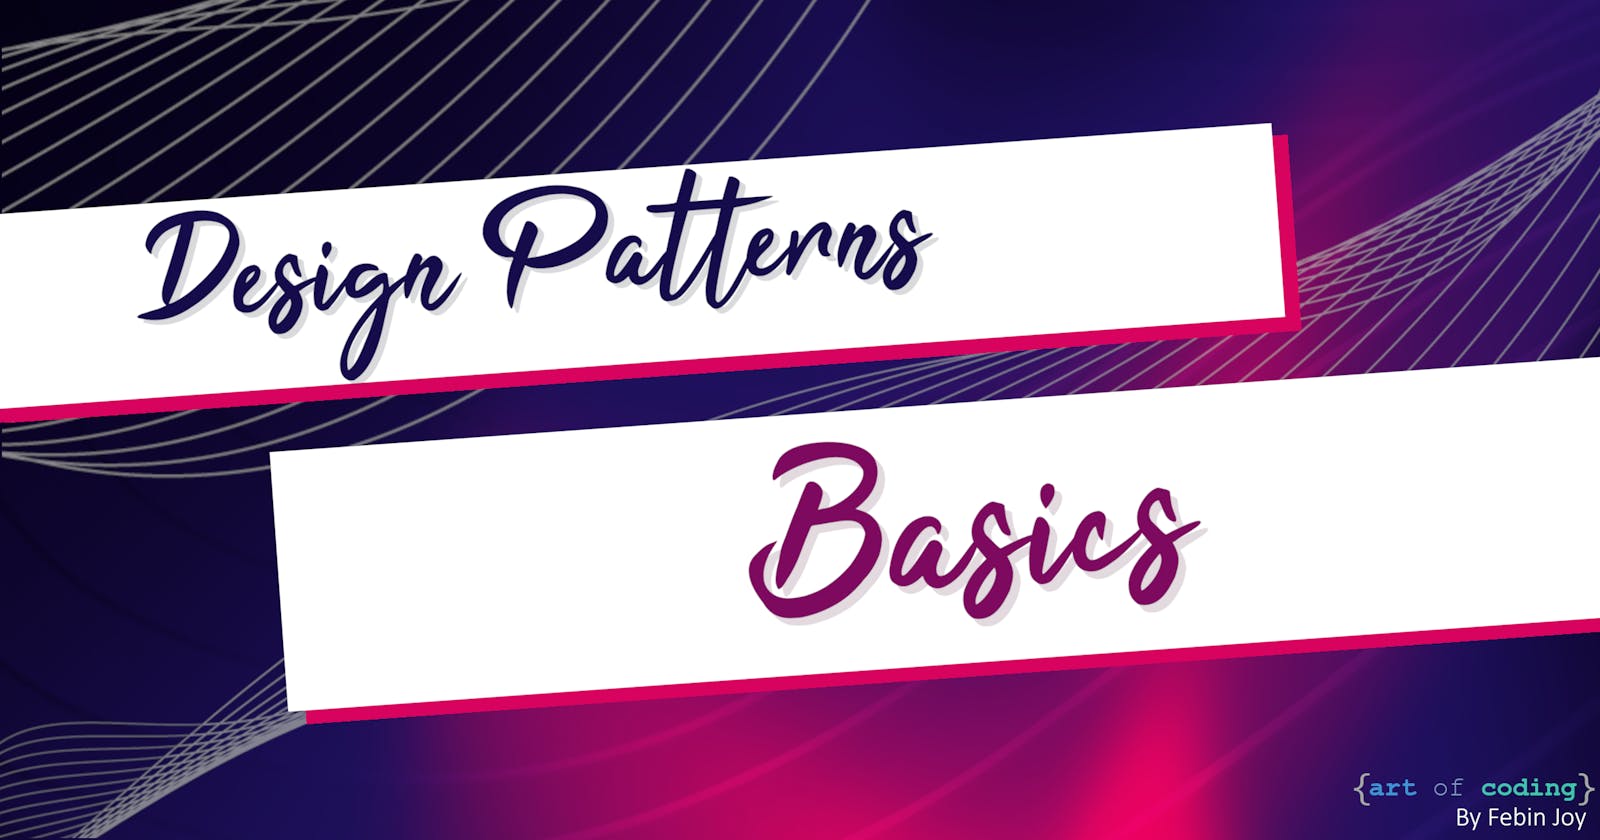 Design Patterns – Basics